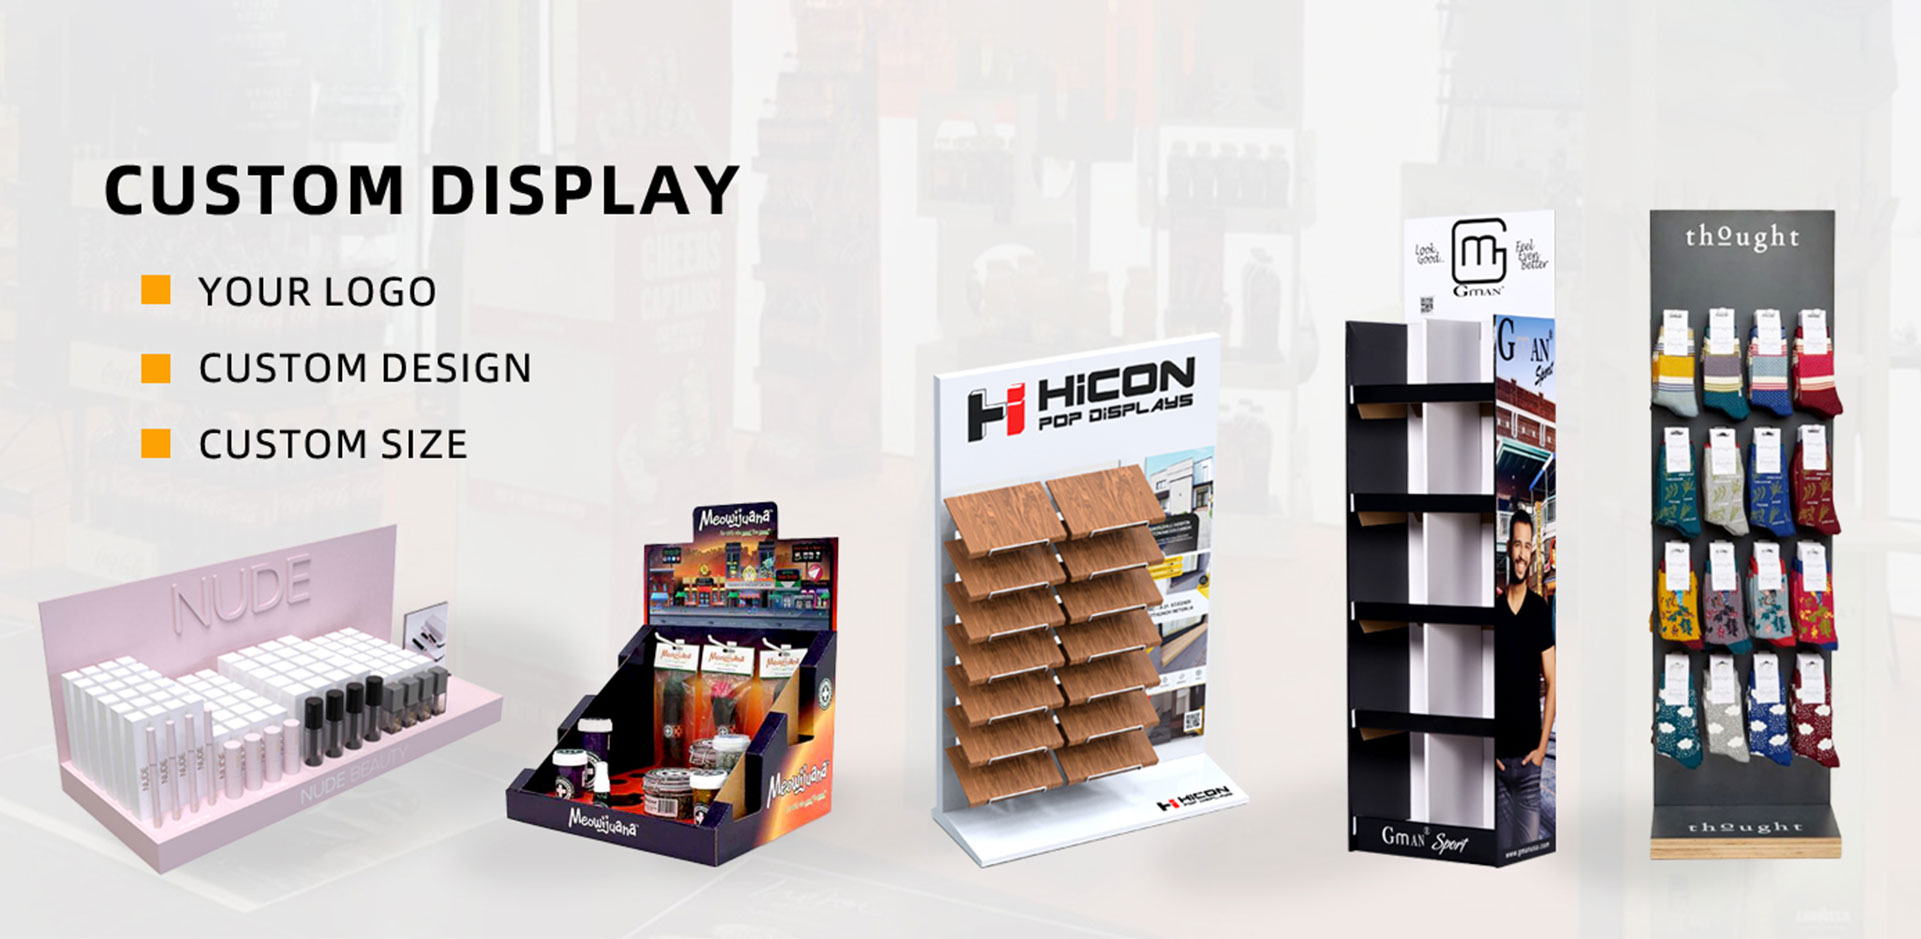 Custom Display Rack, Display Stand, Display Case - HICON POP DISPLAYS